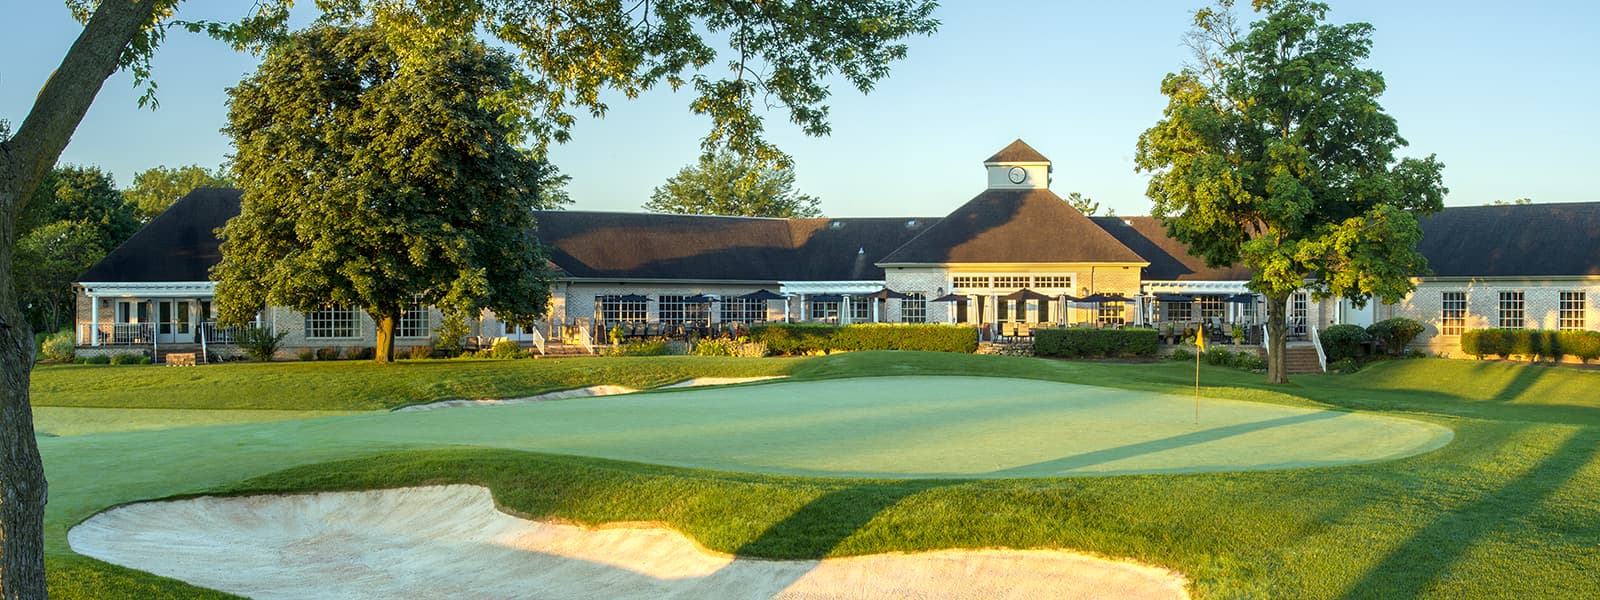 Naperville set to host golf's future stars